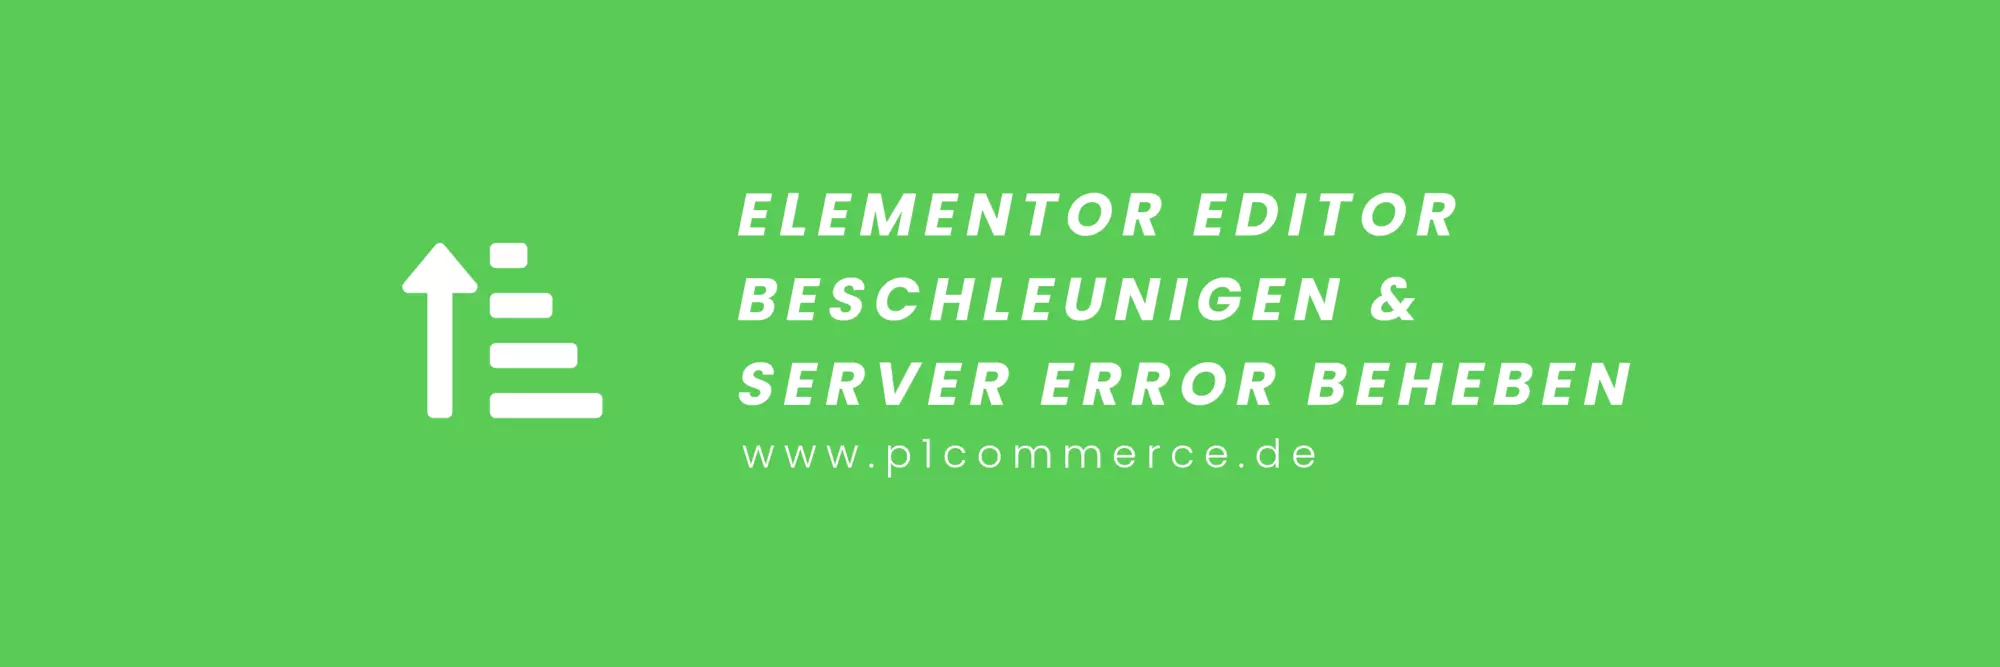 Memory limit Elementor p1 commerce